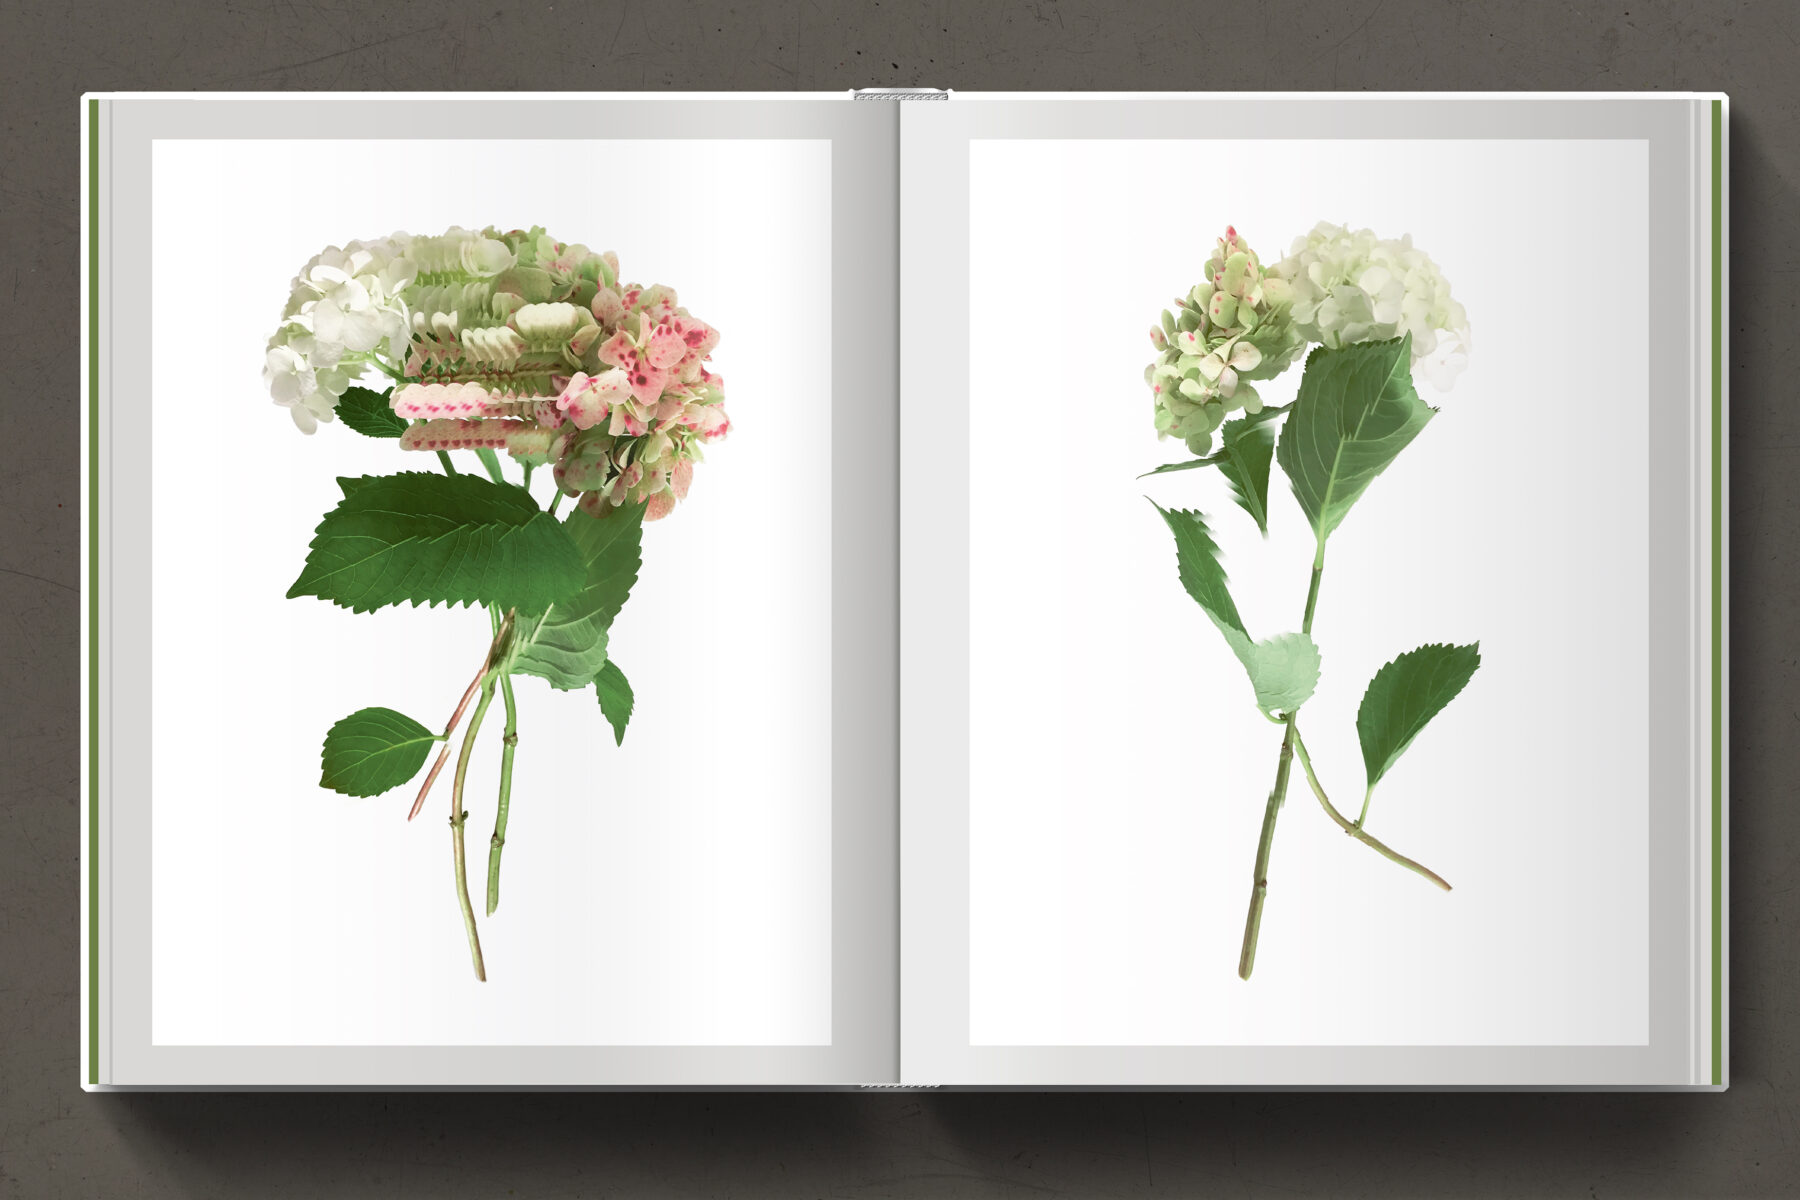 Floral Works by Felix Dobbert (7)